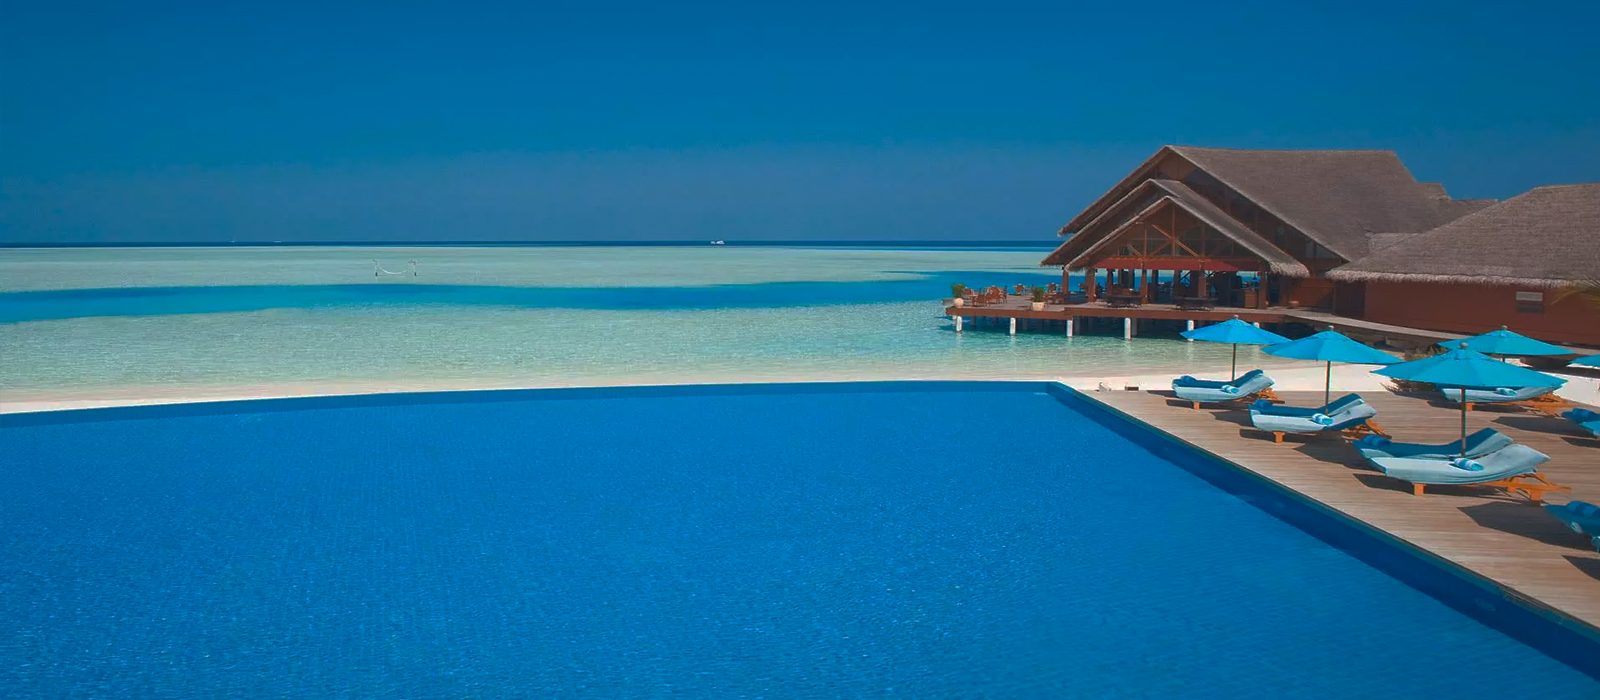 Maldives Honeymoon Anantara Dhigu Island Resort Header